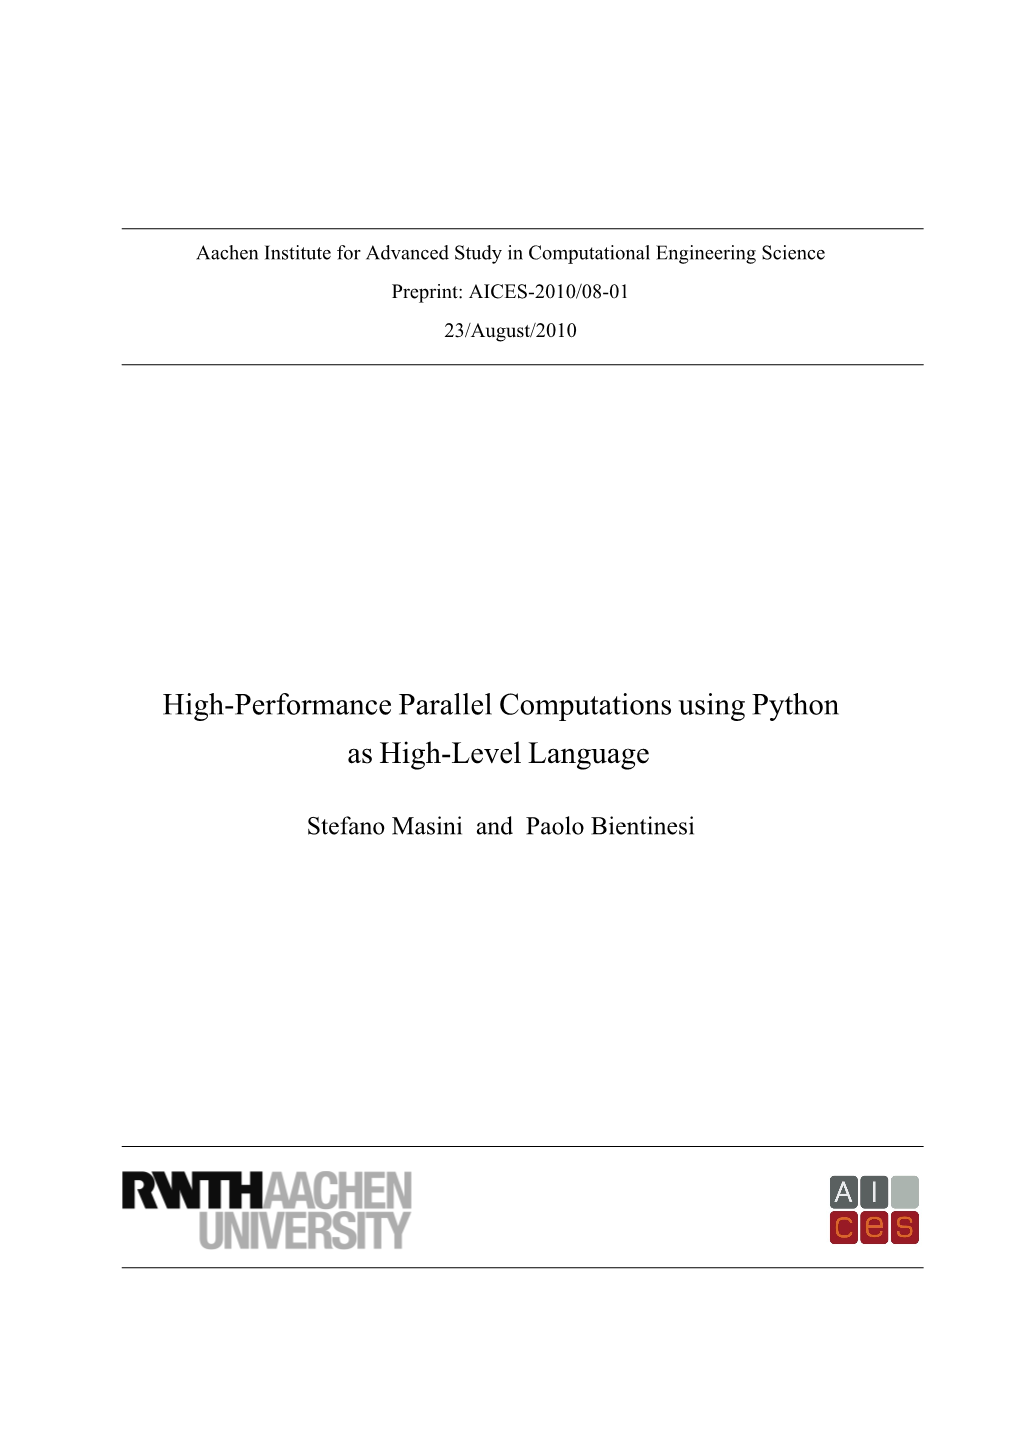 High-Performance Parallel Computations Using Python As High-Level Language